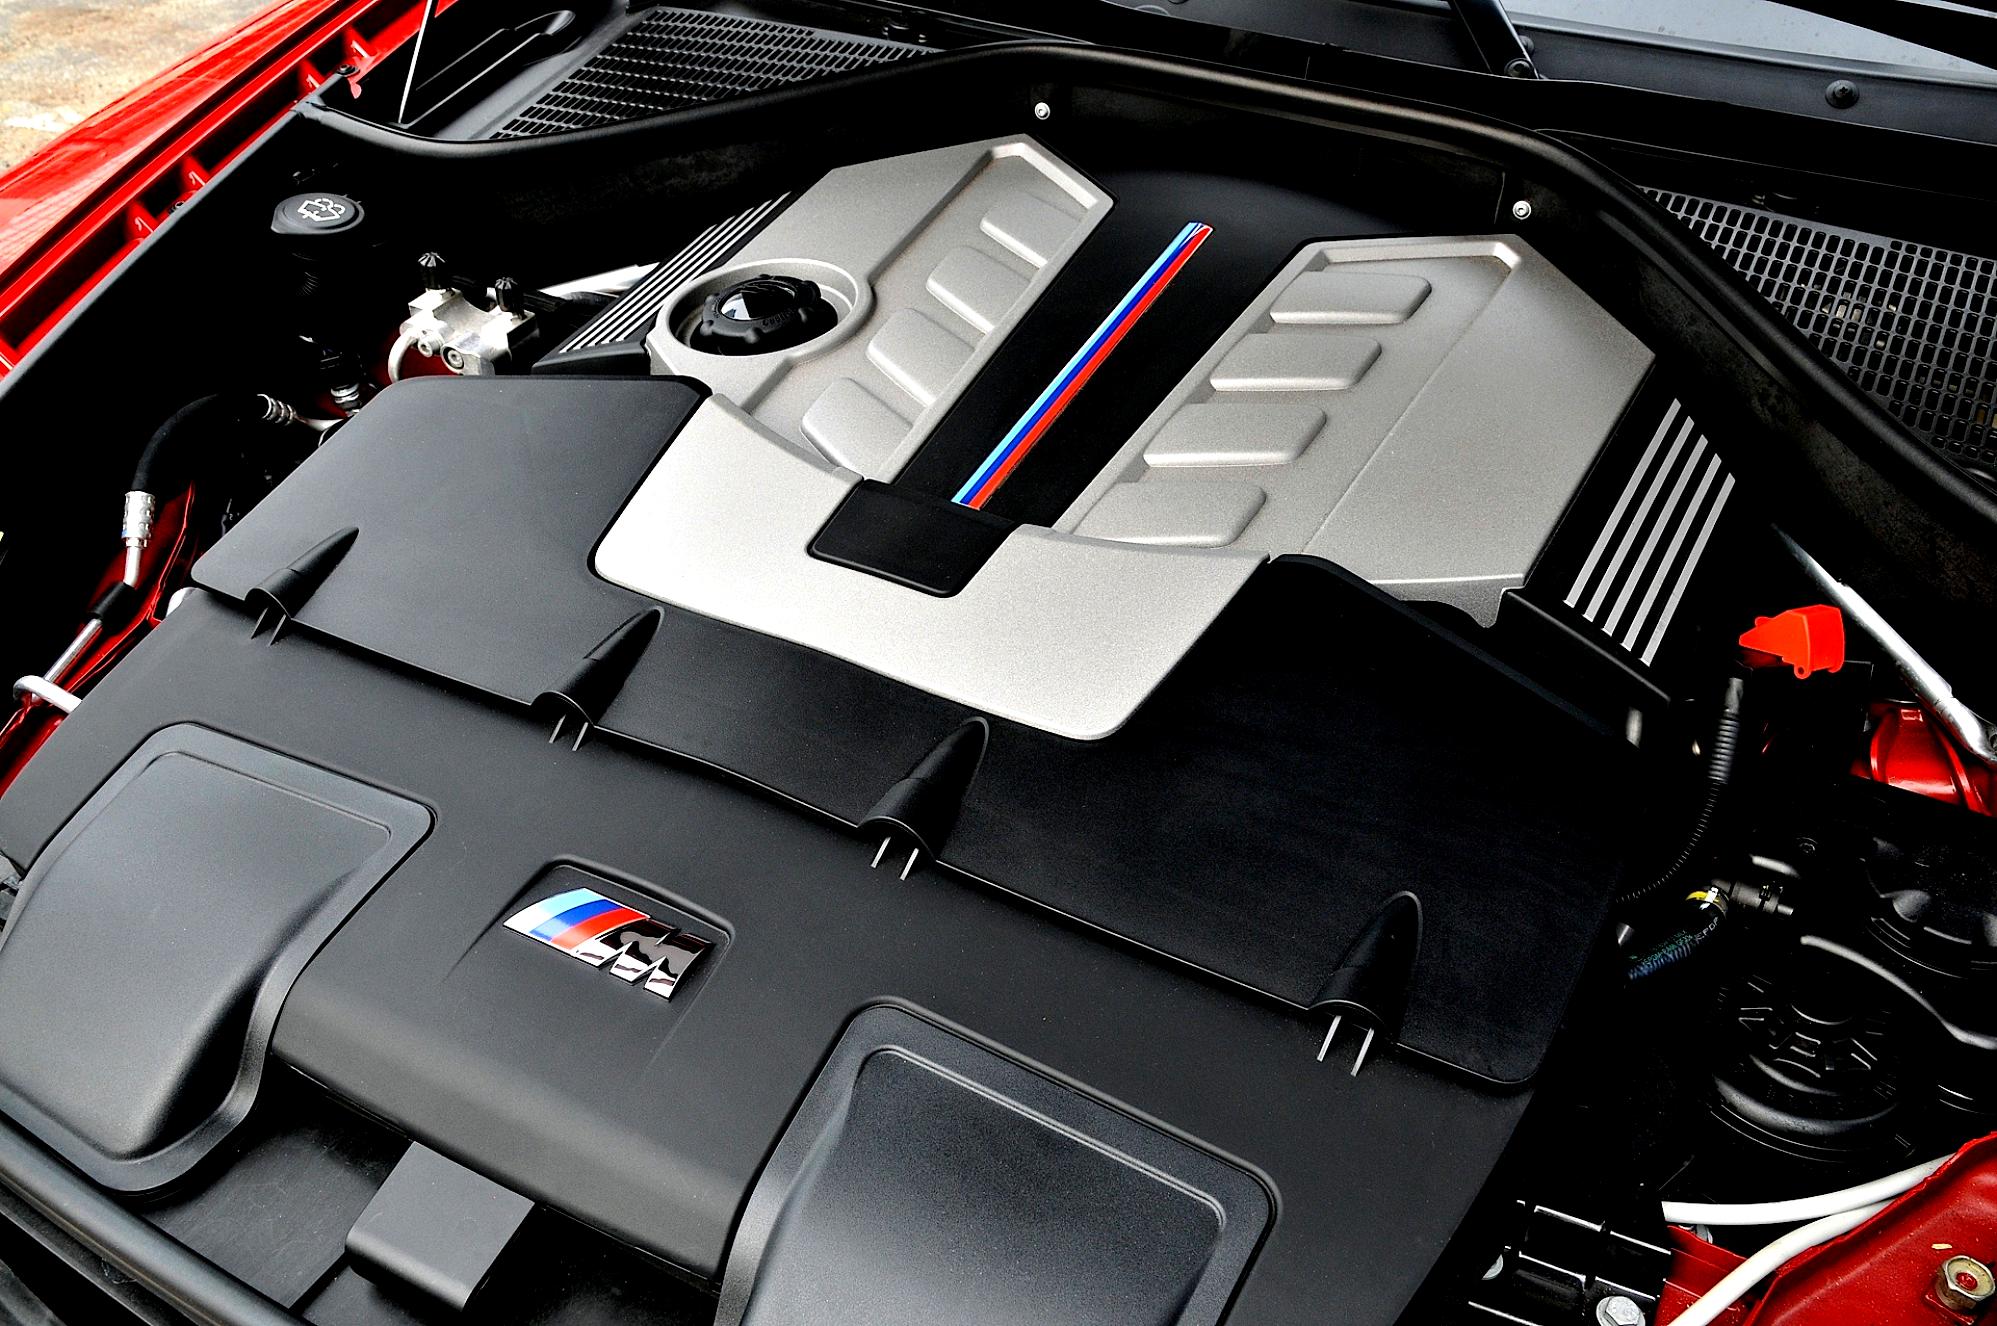 Bmw x6 двигатели. Двигатель БМВ x6 m. Контрактный двигатель BMW x6 m Performance. X6m конфигурация. BMW x6 f16 40d мотор фото.